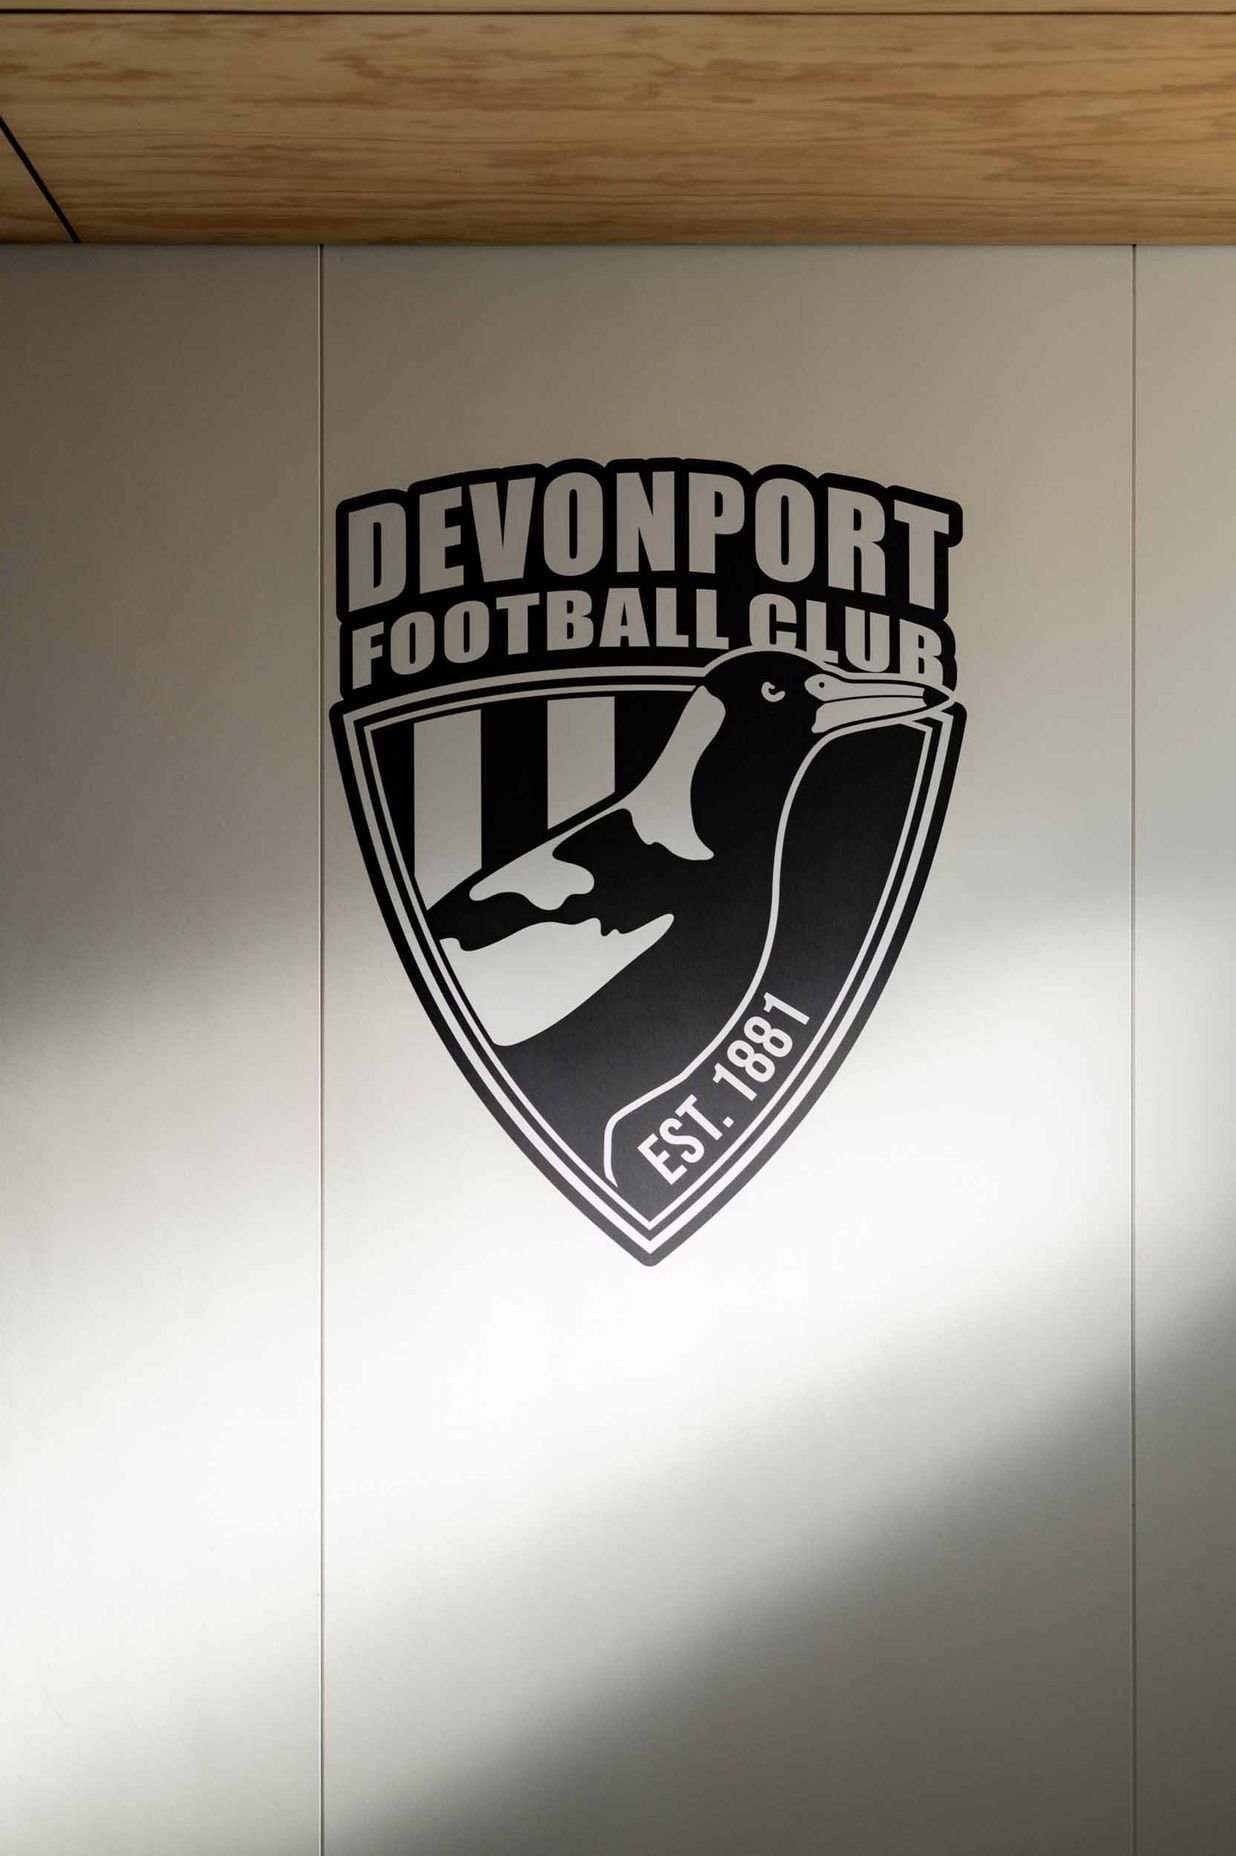 The Devonport Football Club